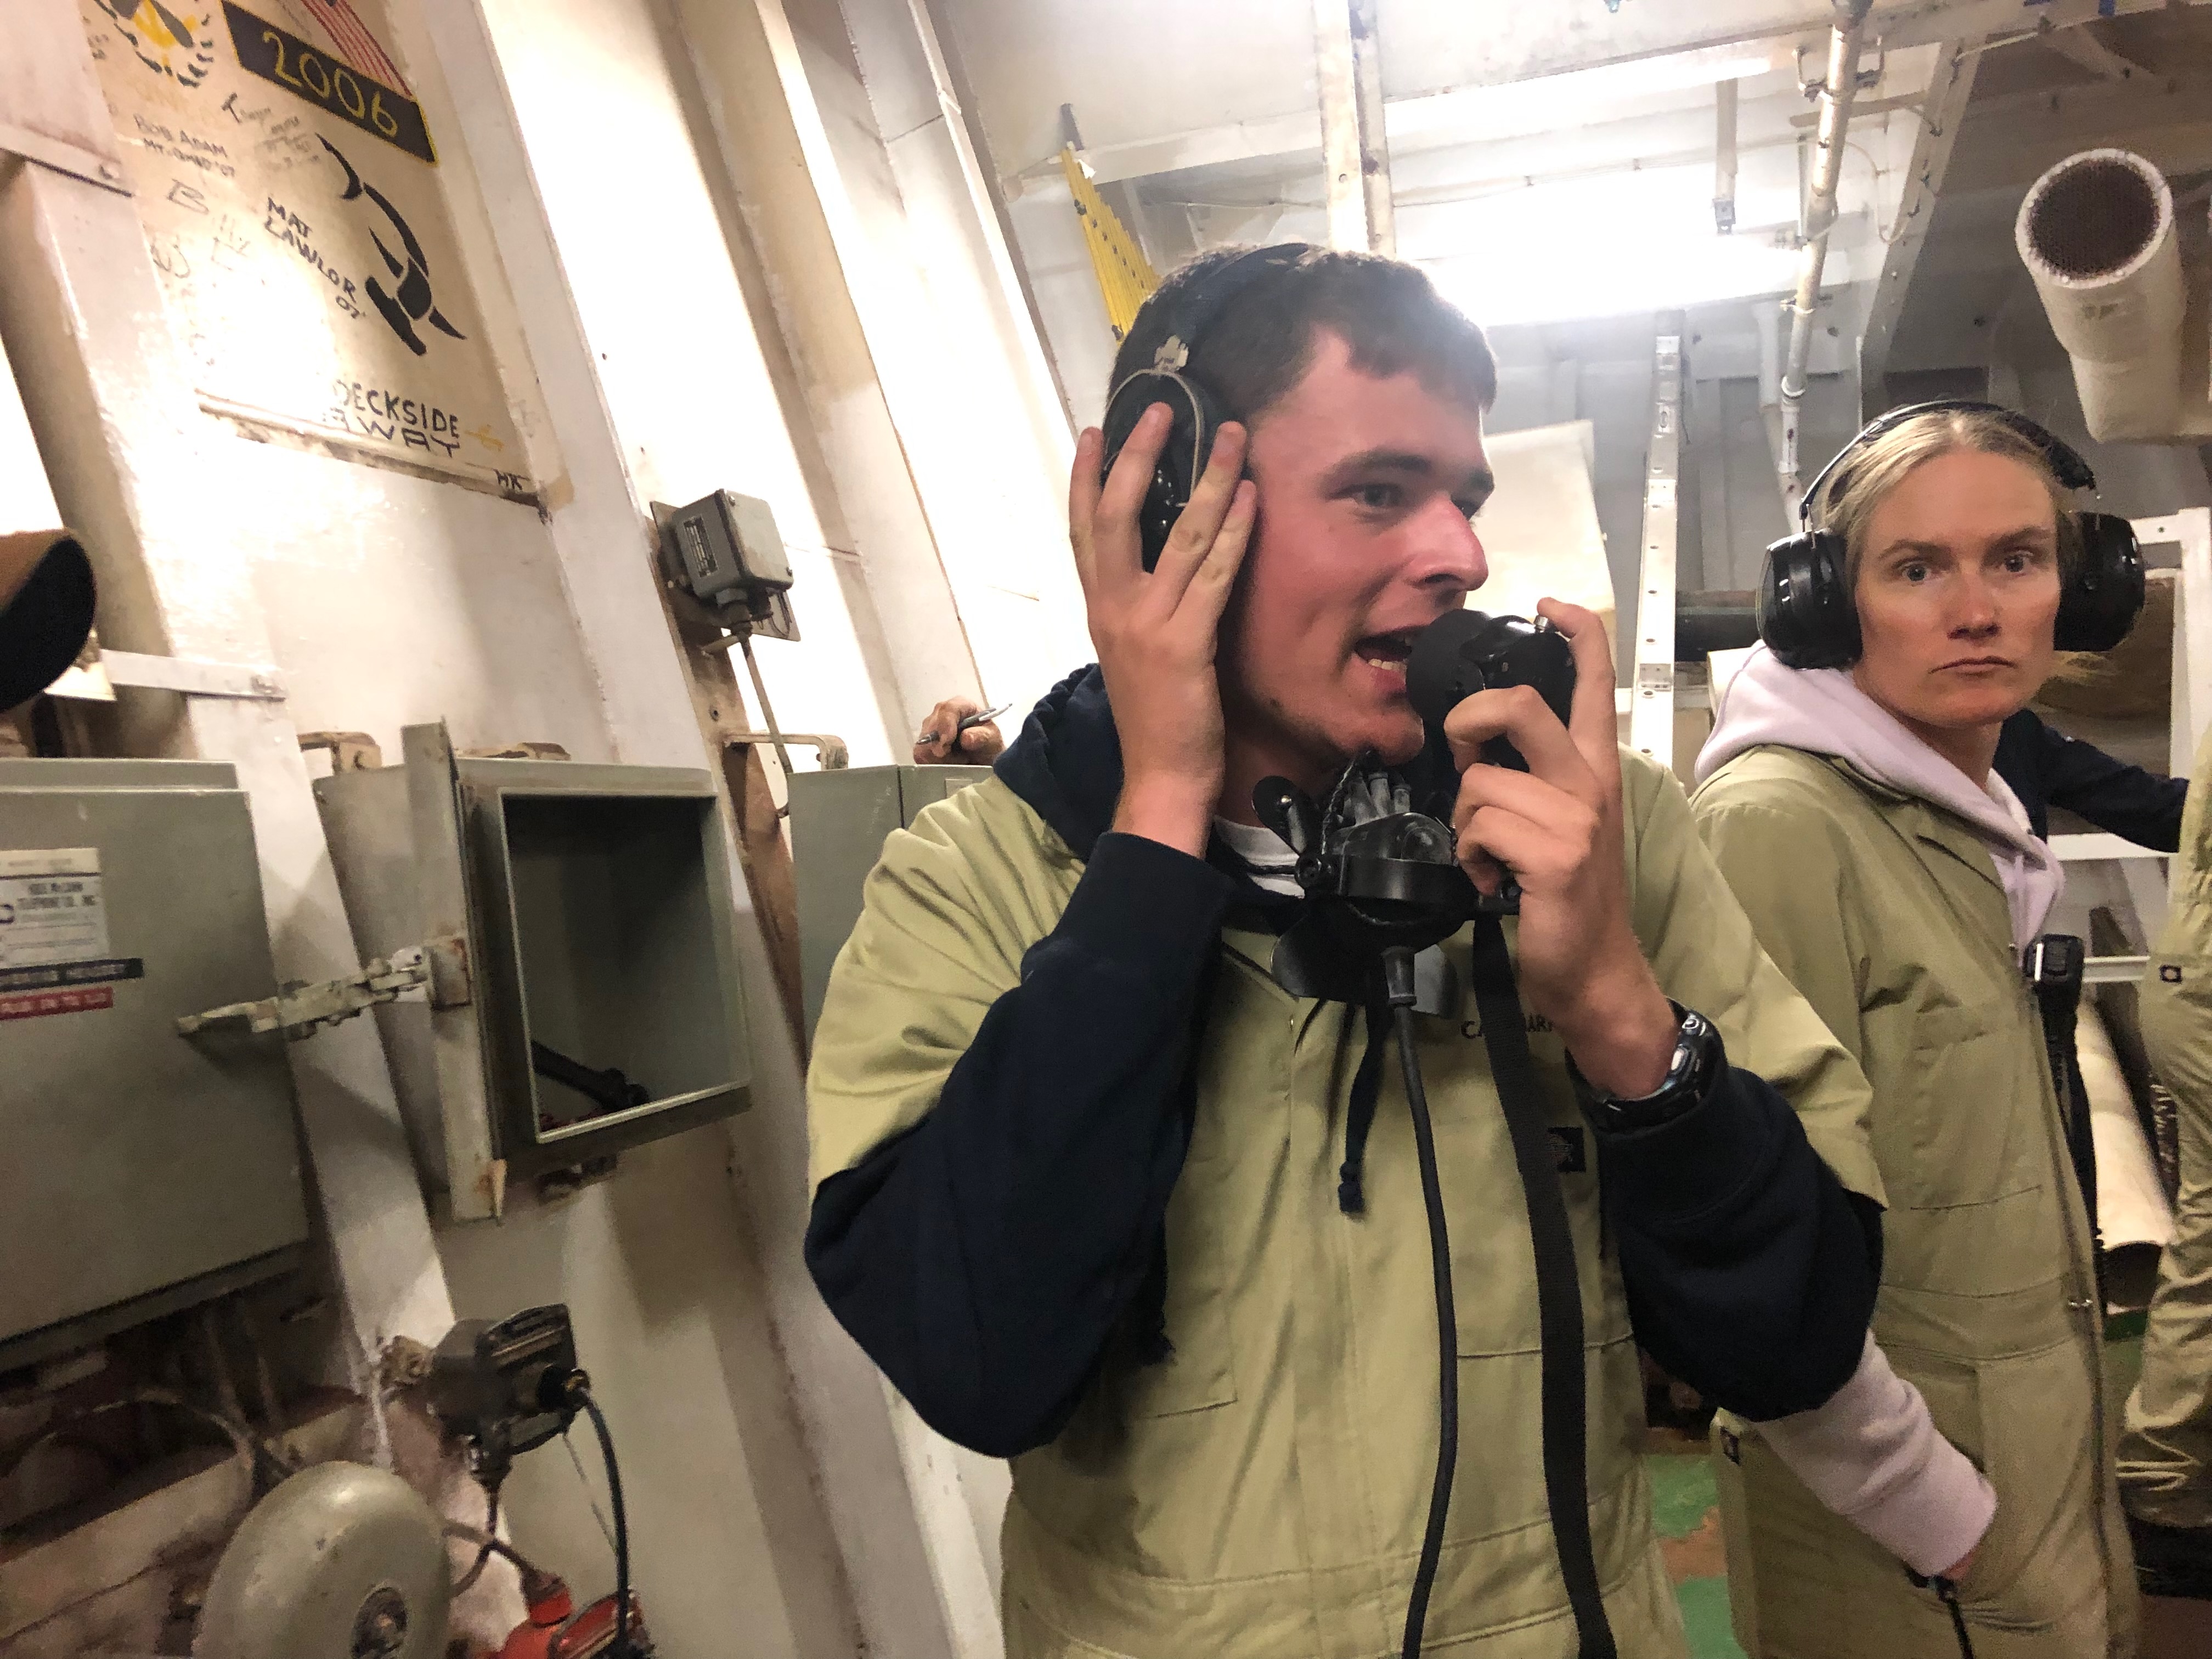 3C cadet Dan Golinski establishes communication with the bridge through the sound powered phone